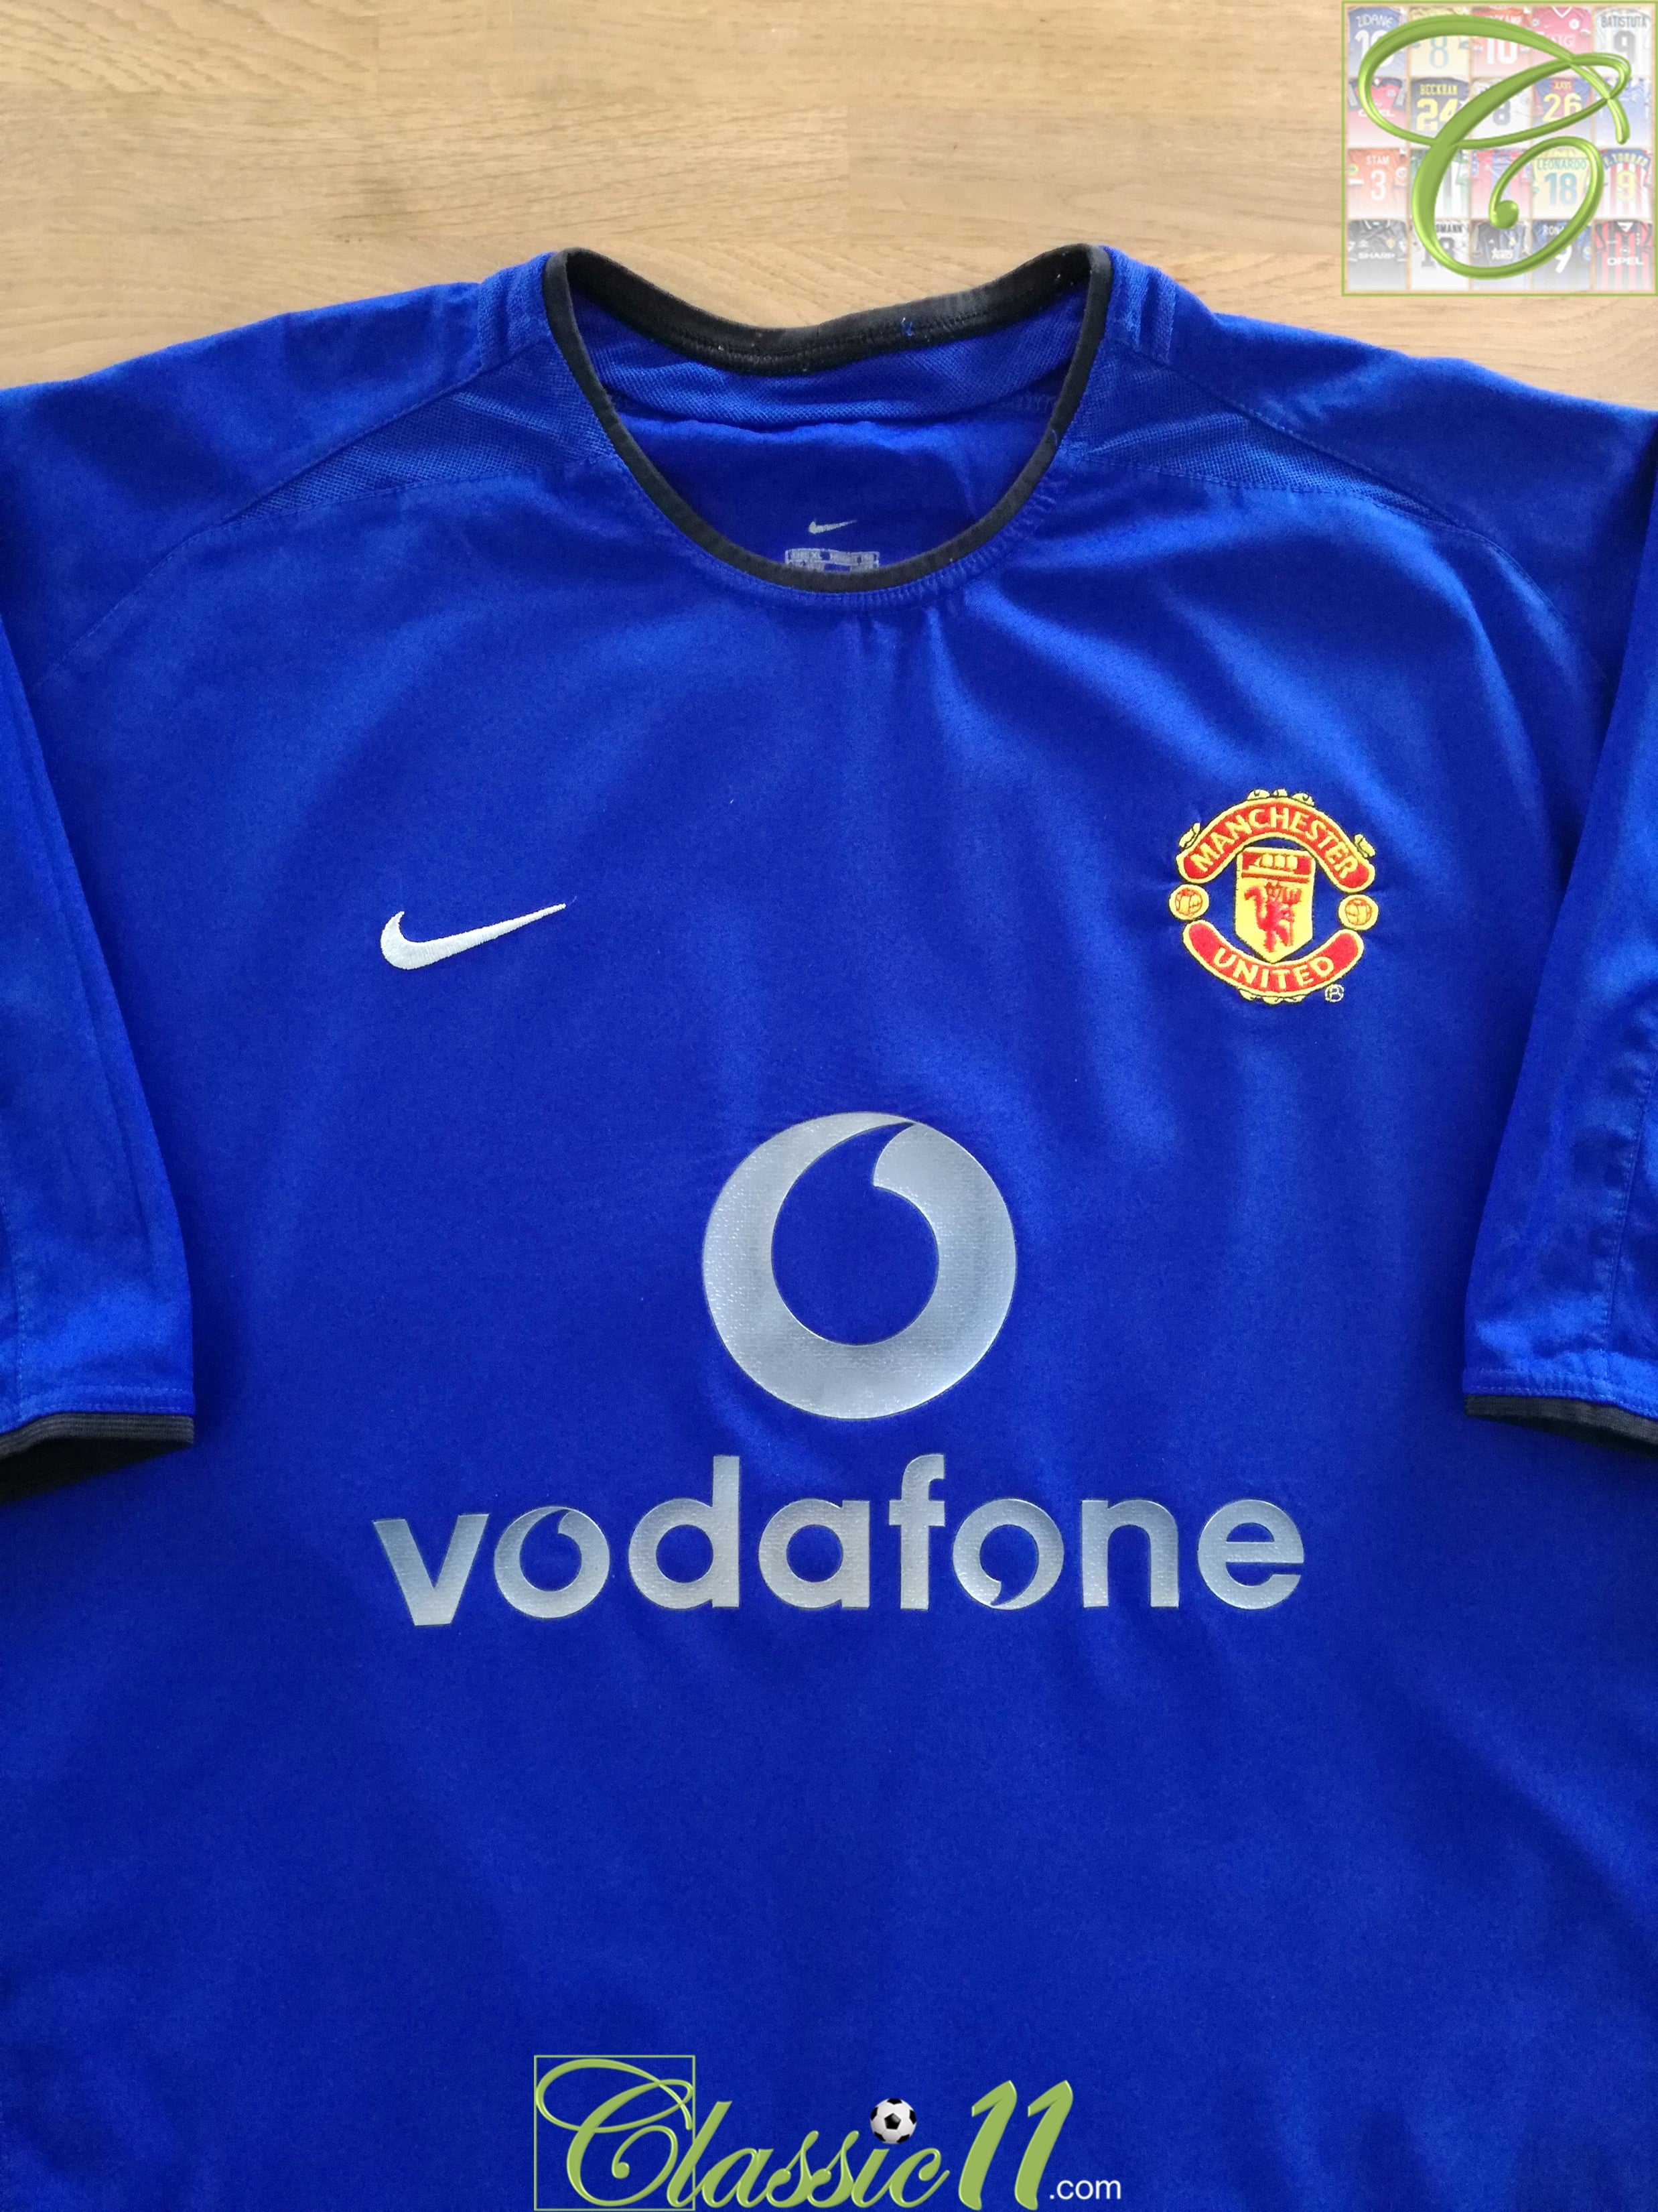 2002/03 Man Utd 3rd Football Shirt / Old Nike Vintage Soccer 